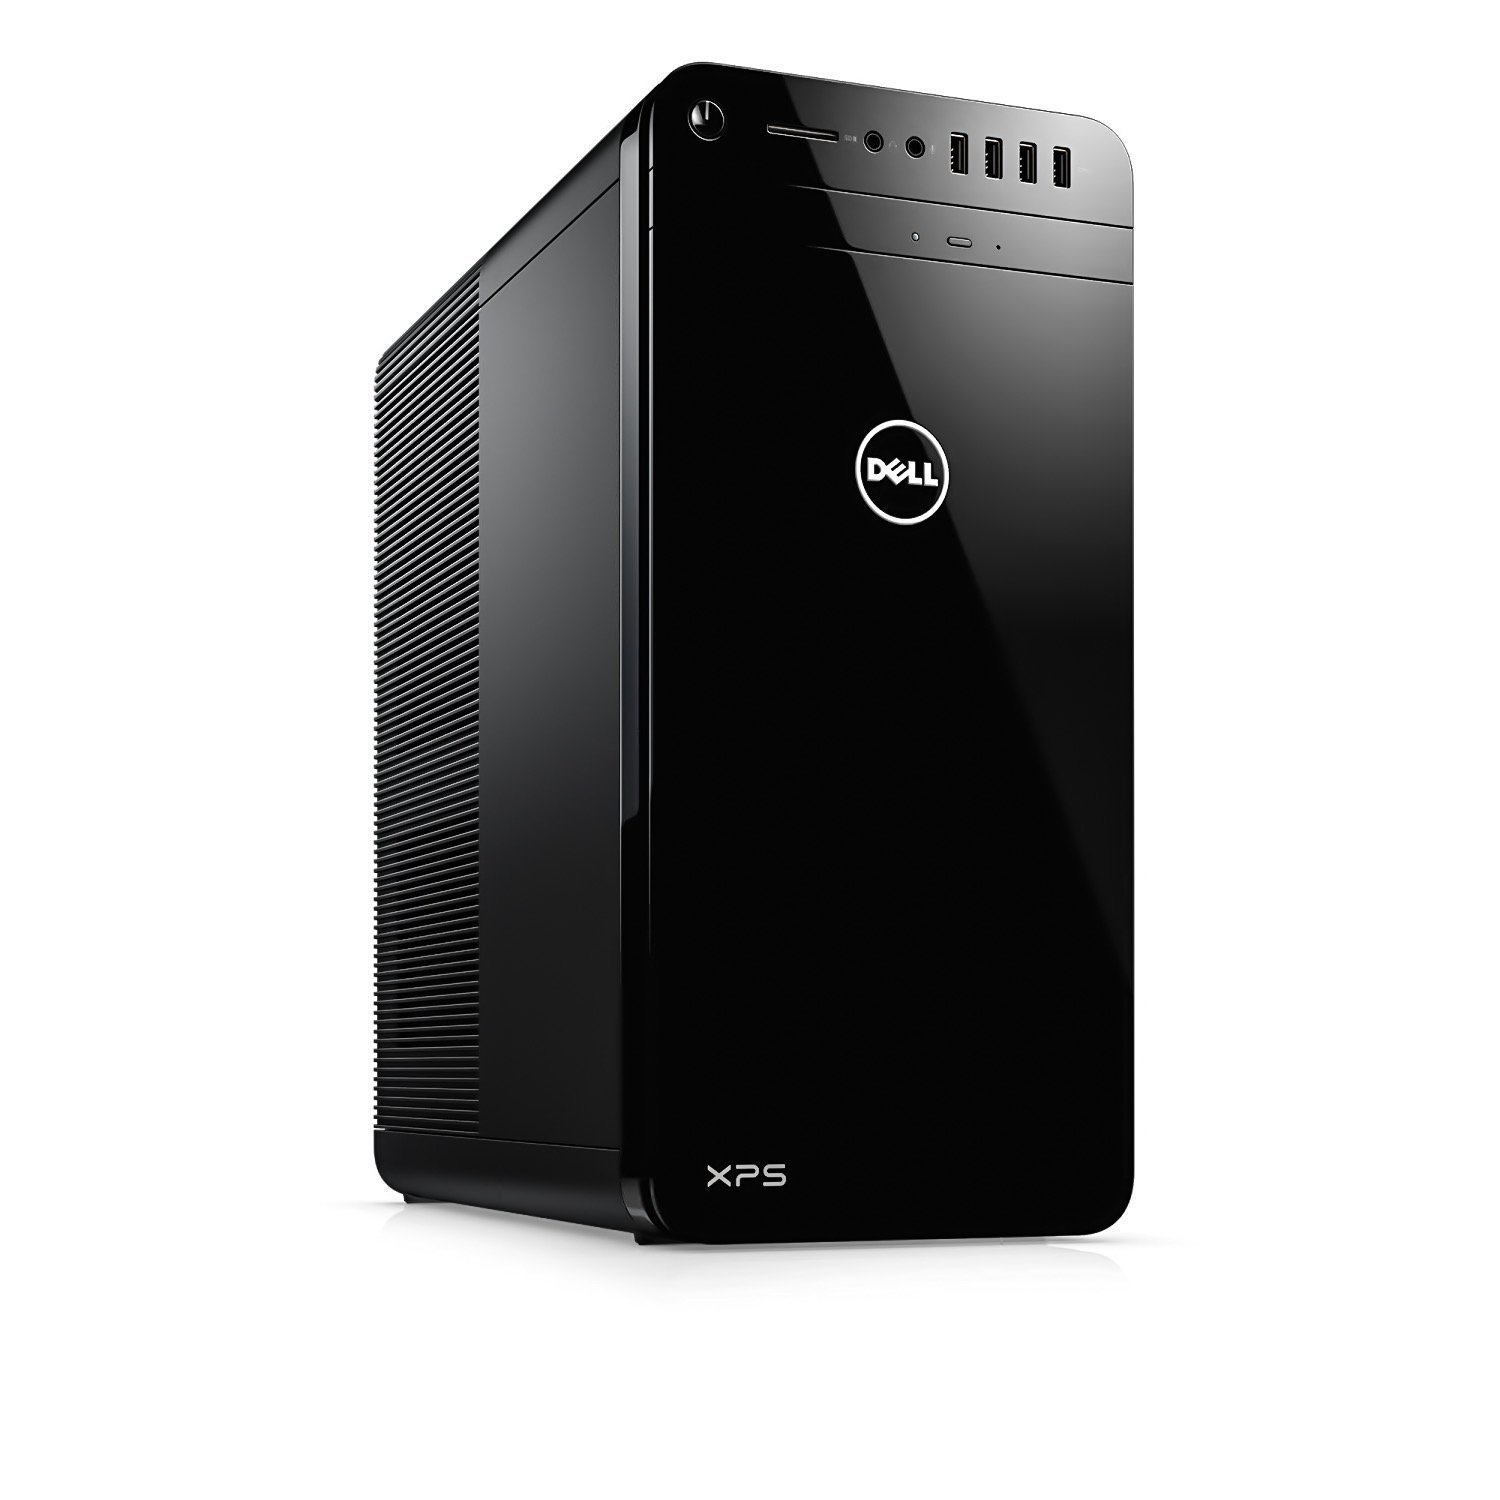 Dell Refurbished Dell XPS 8920 Intel Core i7-7700 X4 3.6GHz 16GB 1TB Win10, Black (Certified Refurbished)